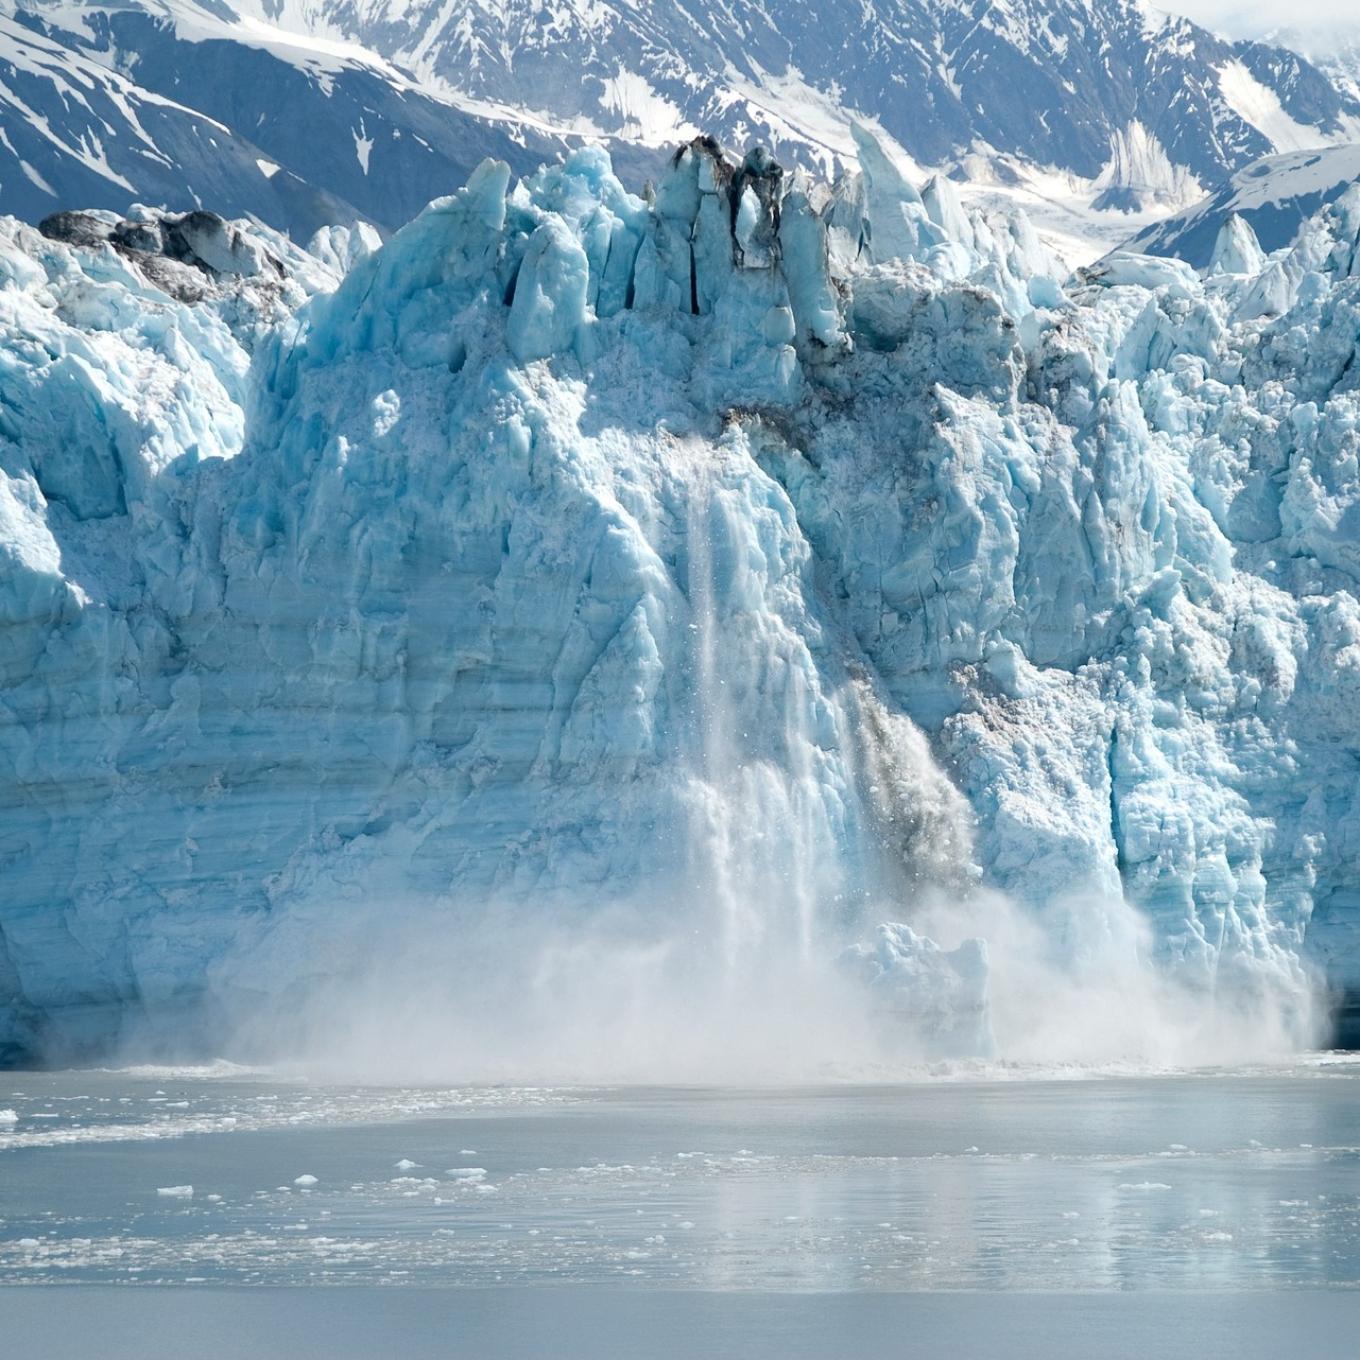 A glacier melting into the ocean